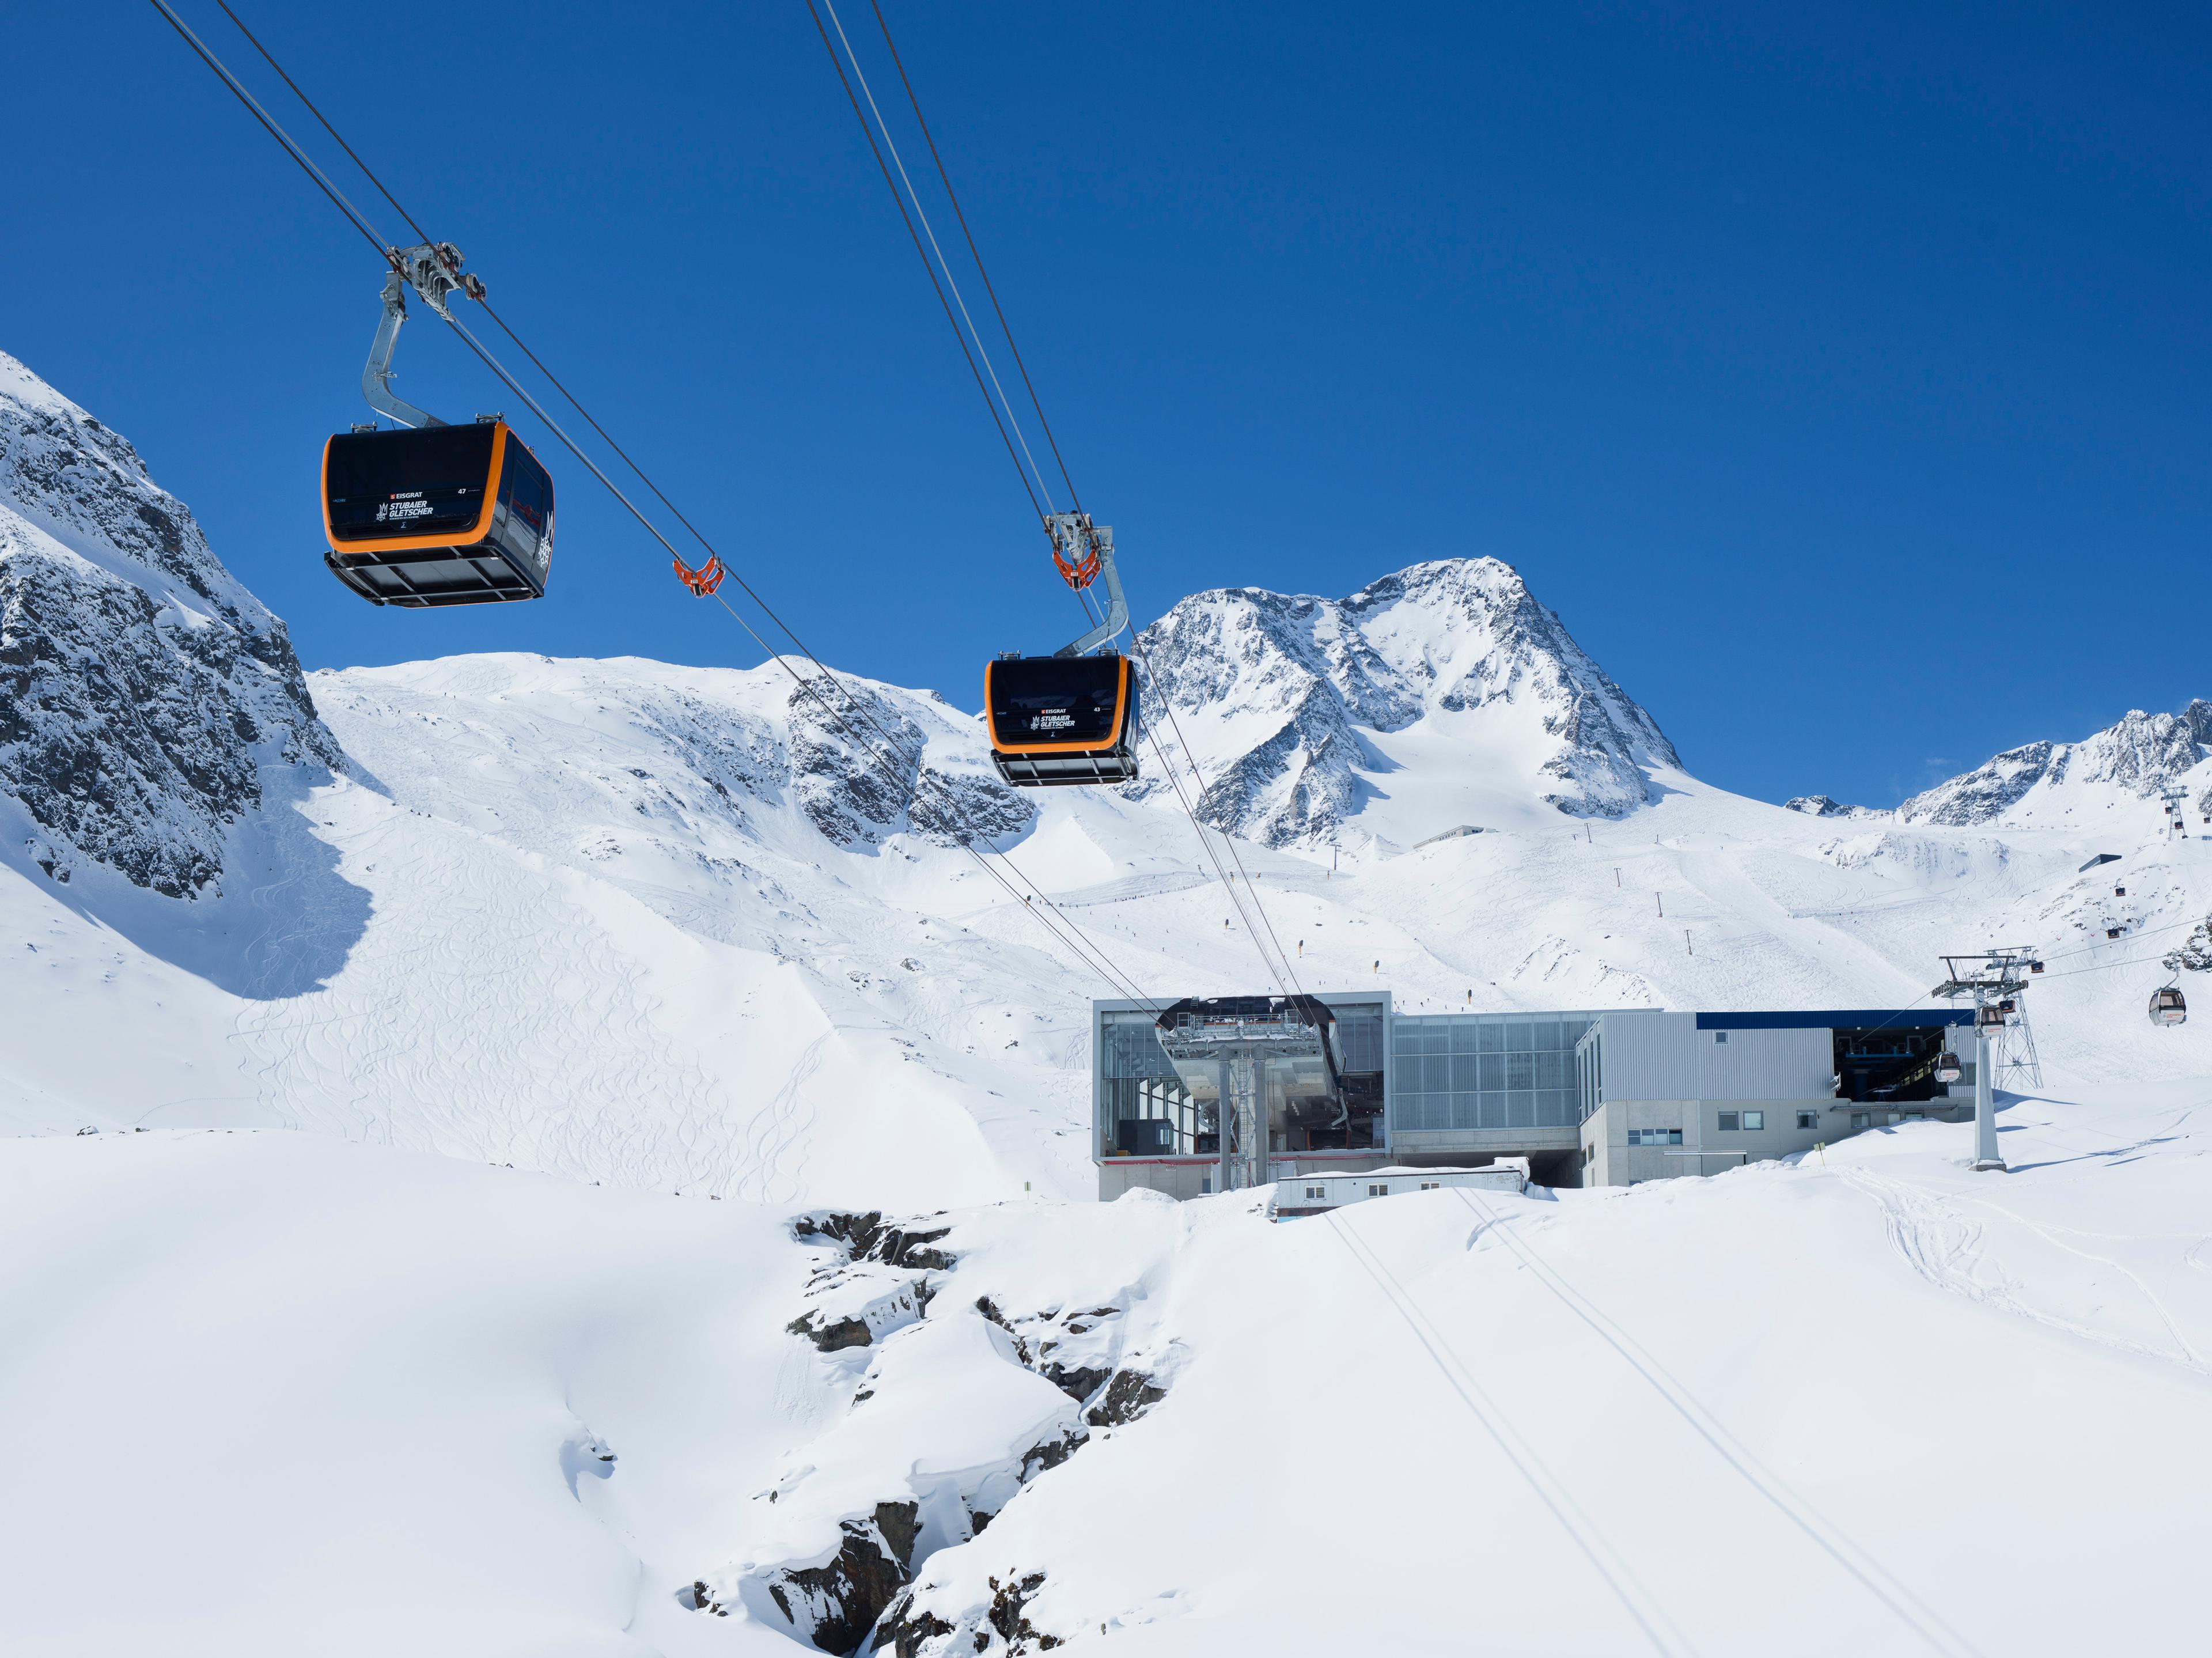 Fernau intermediate station of the 3S Eisgrat cable car, Stubaier Gletscher, Austria